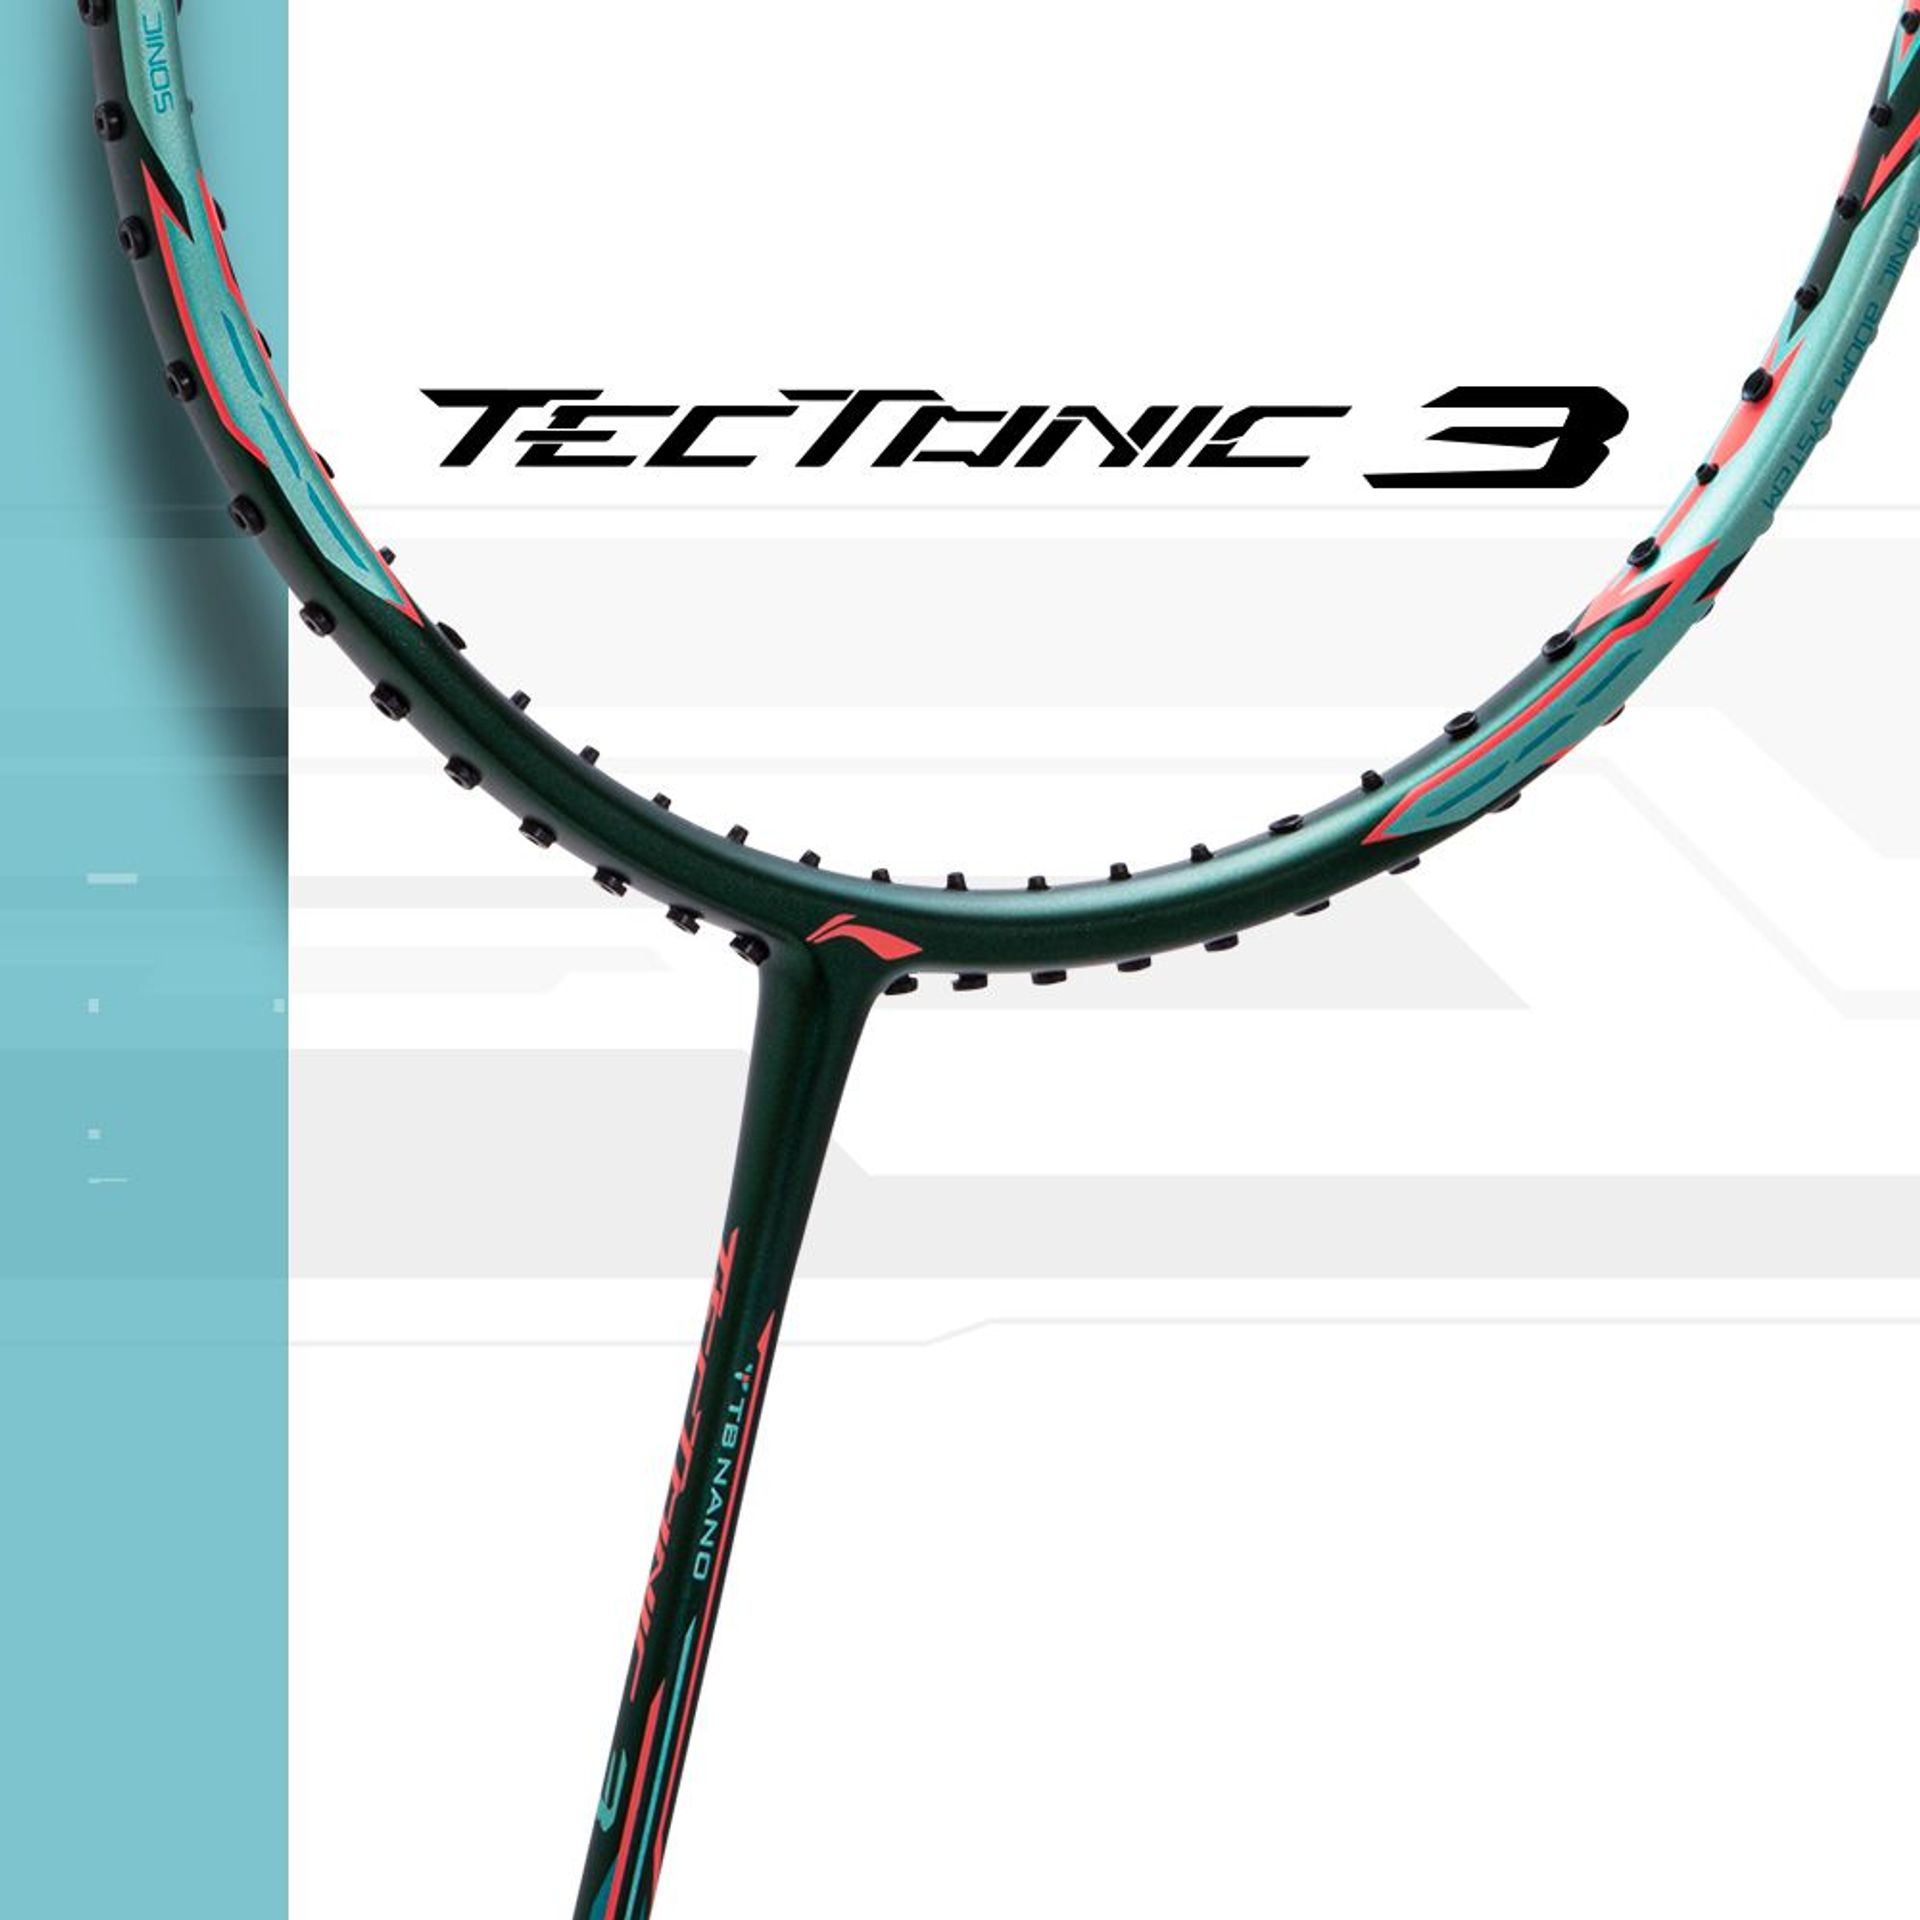 Close up of Tectonic 3 Badminton racket frame by Li-Ning Studio